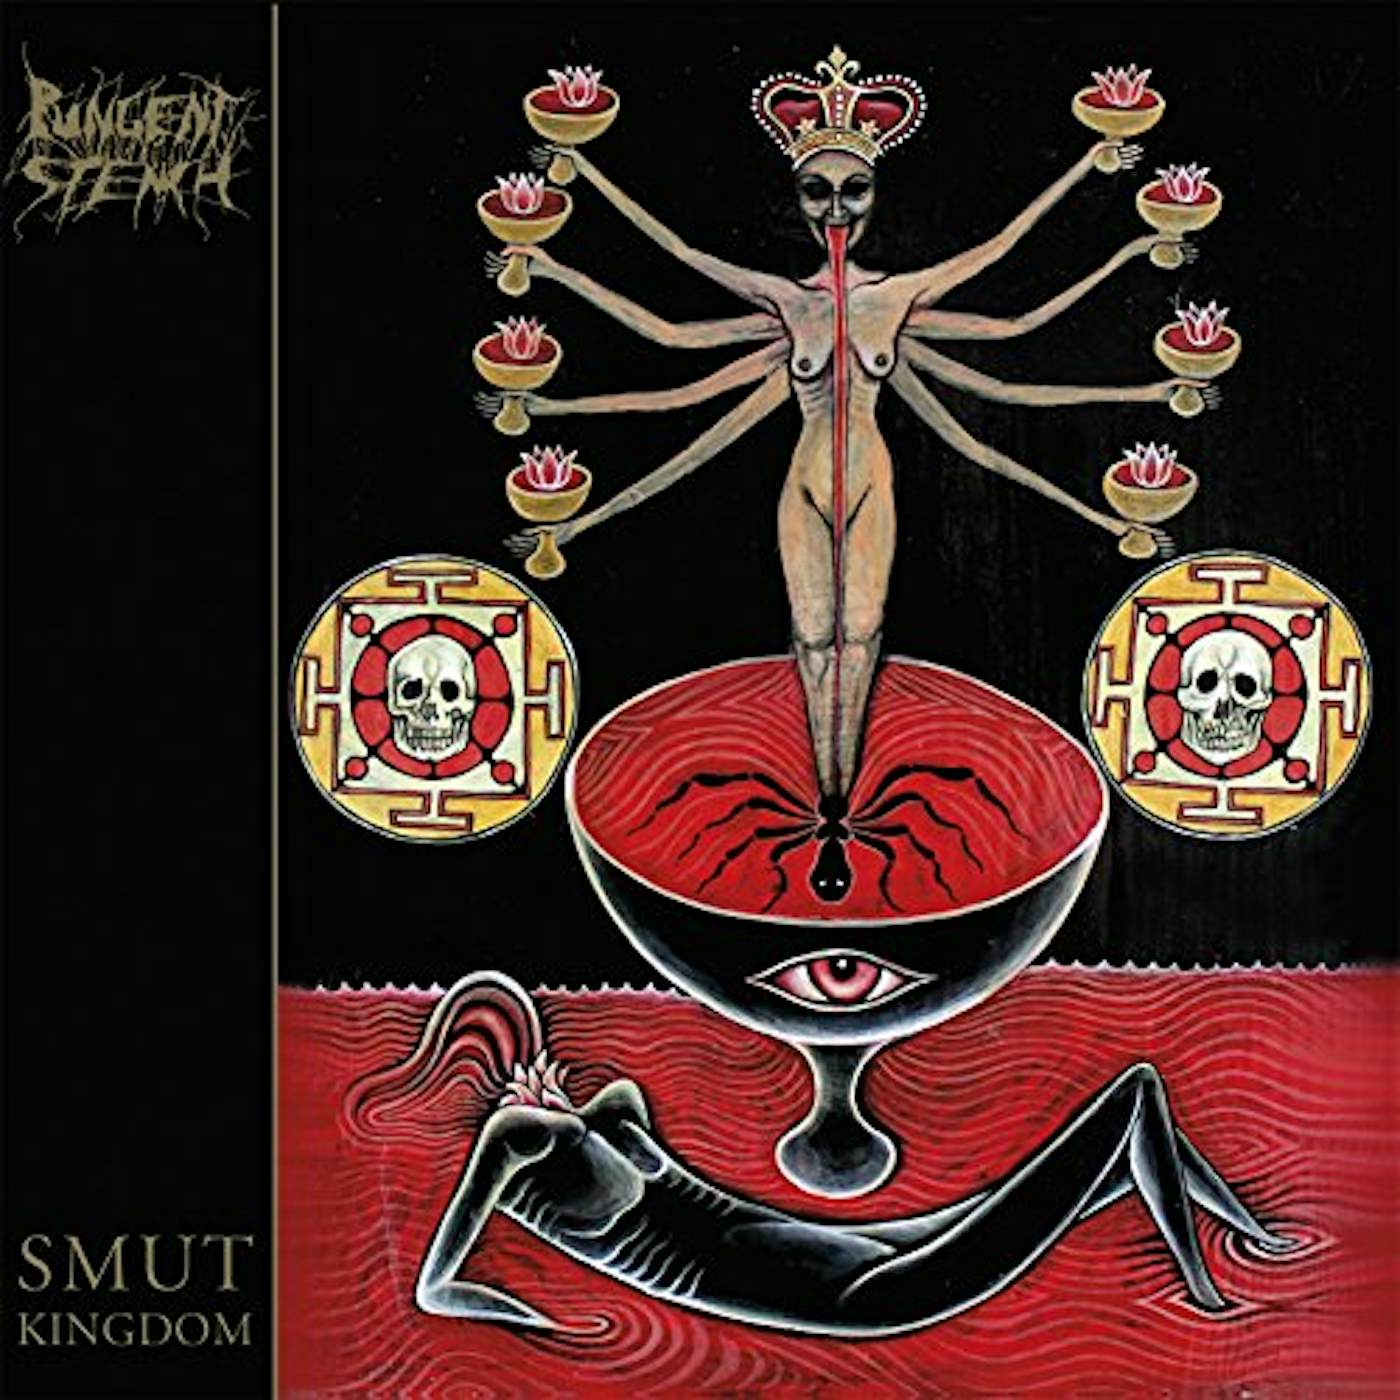 Pungent Stench SMUT KINGDOM (CLEAR VINYL) Vinyl Record